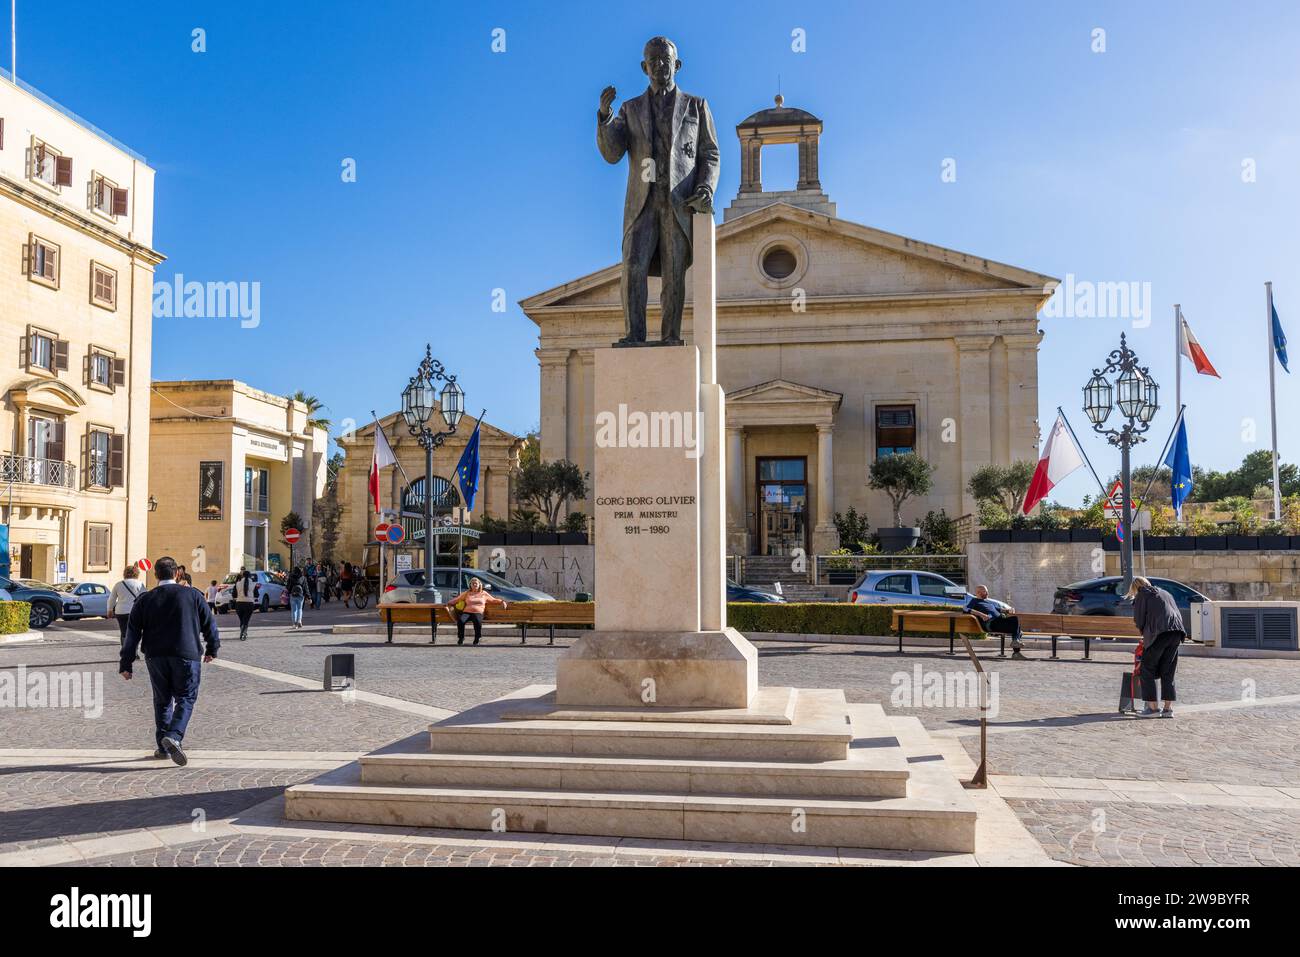 Statue of former Prime Minister Ġorġ Borg Olivier in front of the Stock Exchange building on Castille Square in Valletta, Malta Stock Photo